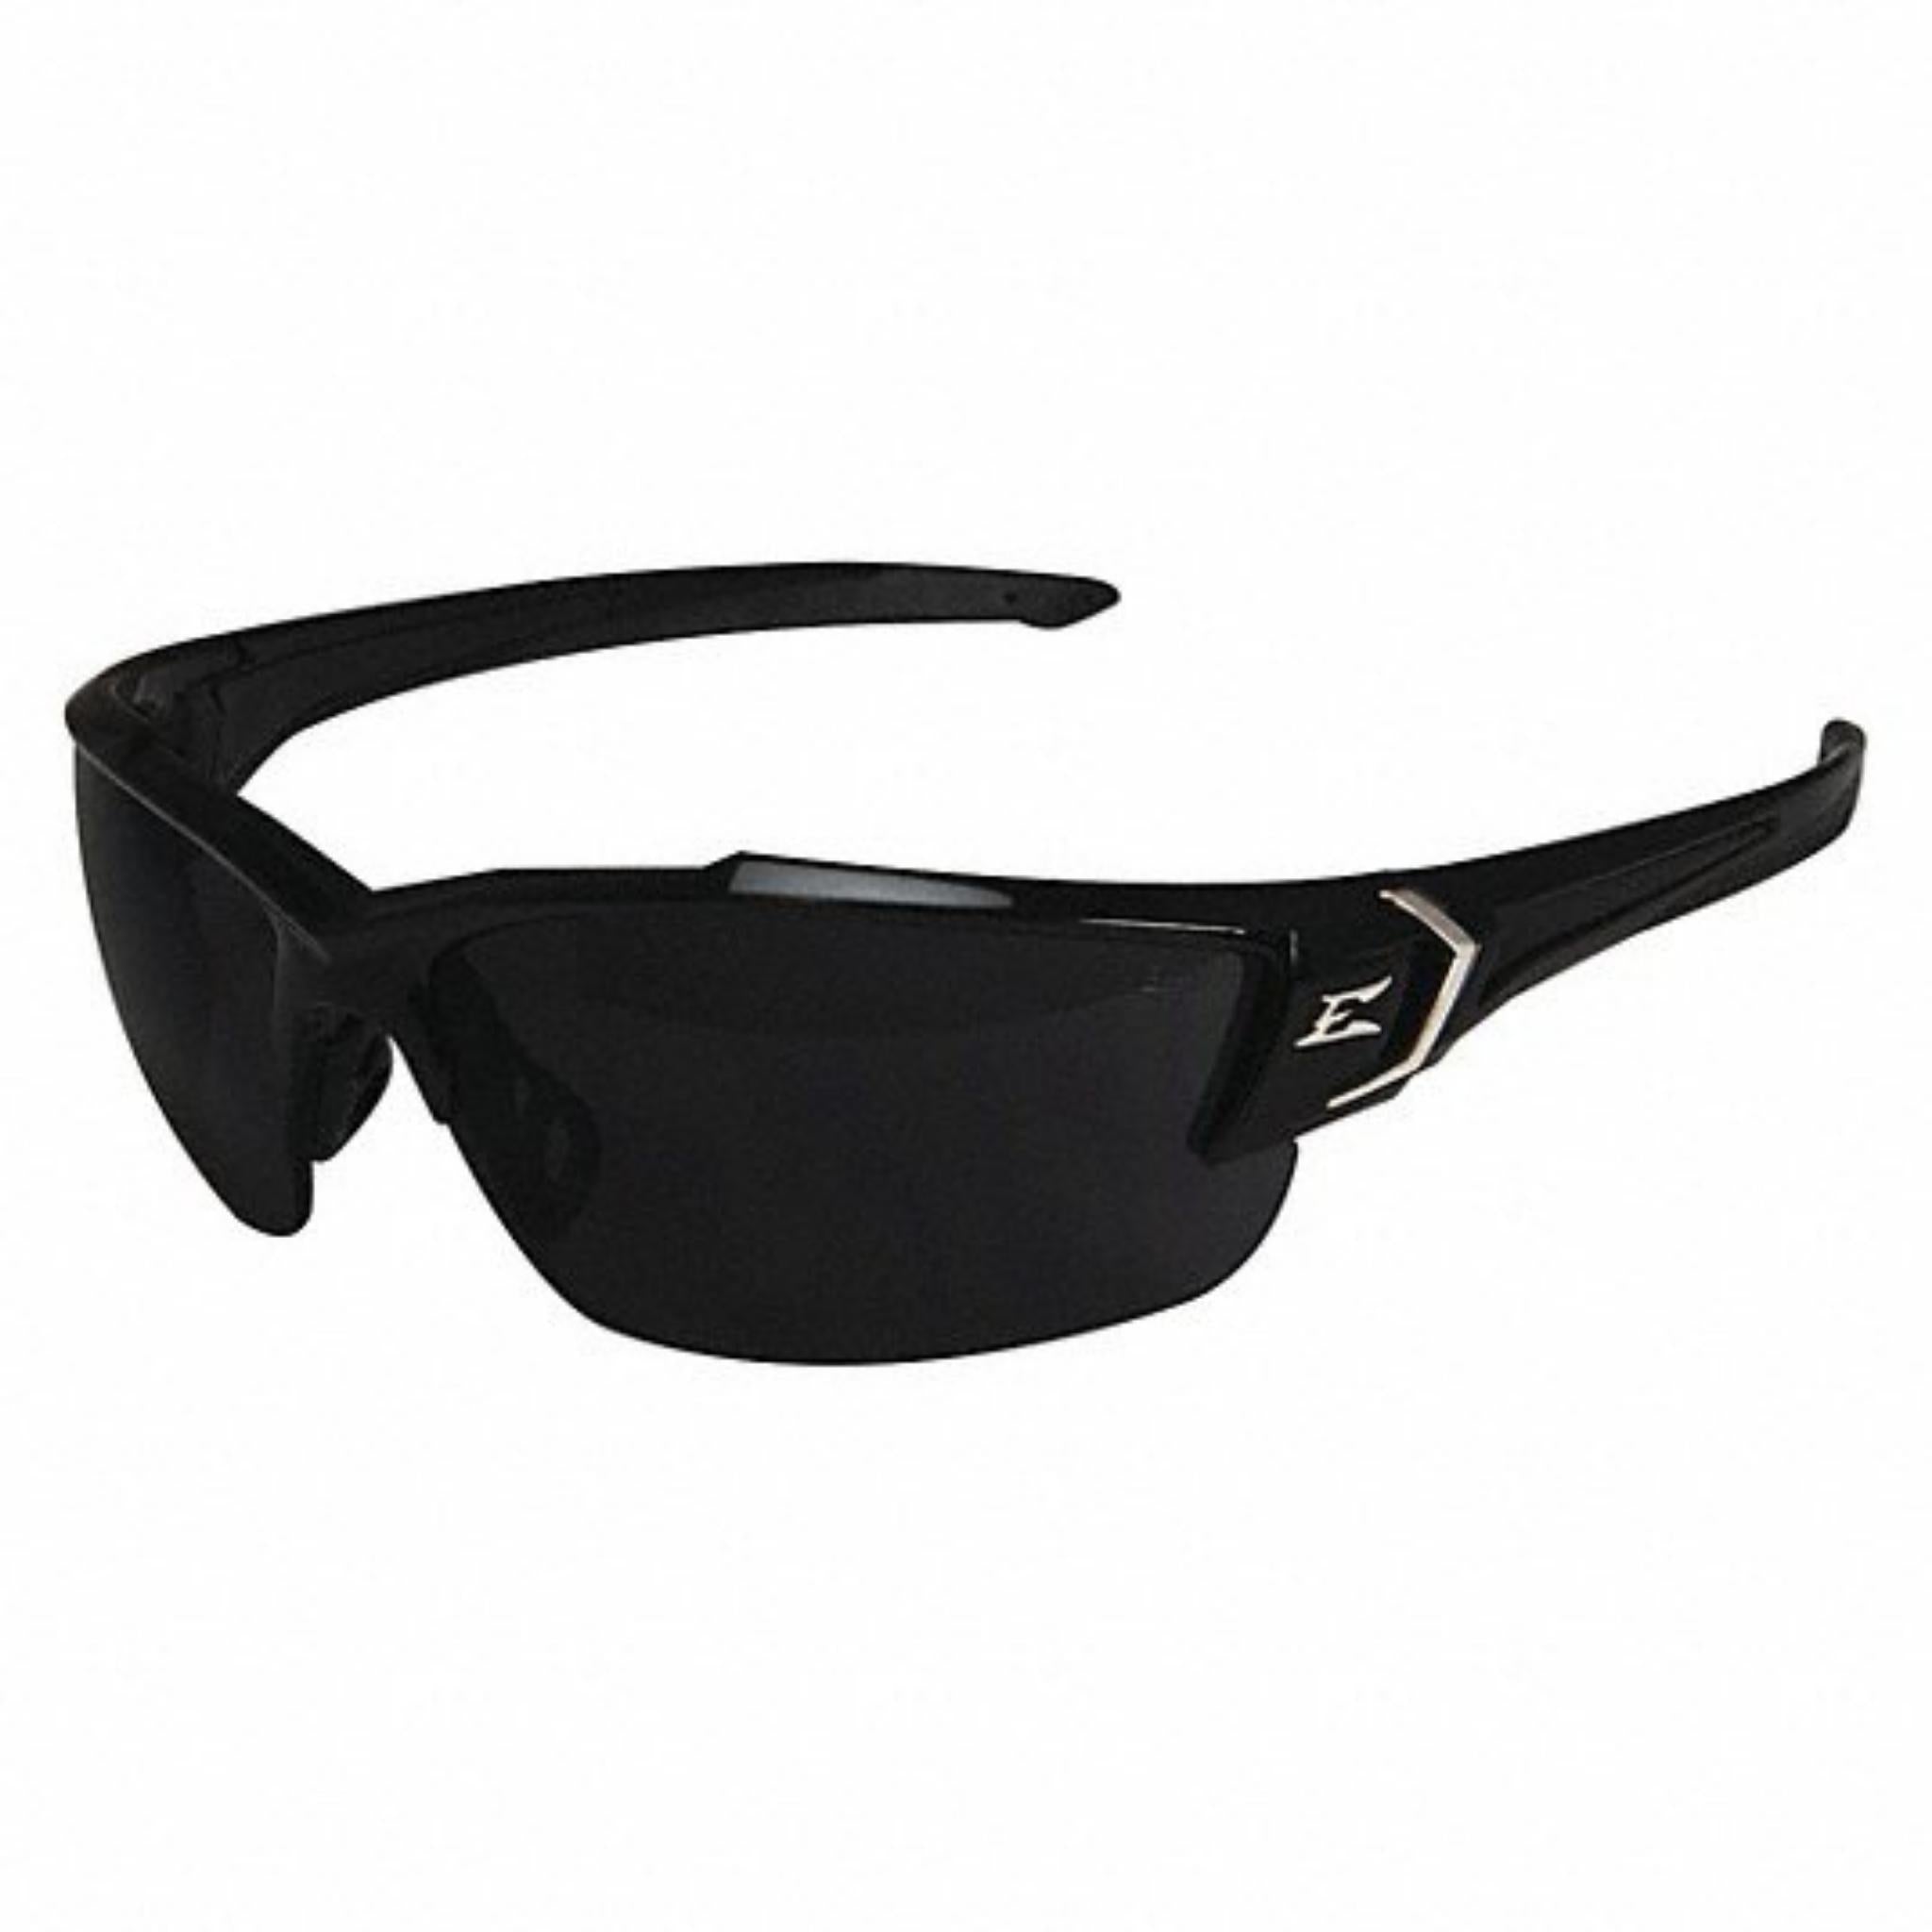 EDGE TSDK216 KHOR Safety Glasses - Black Frame - Smoke Polarized Lens